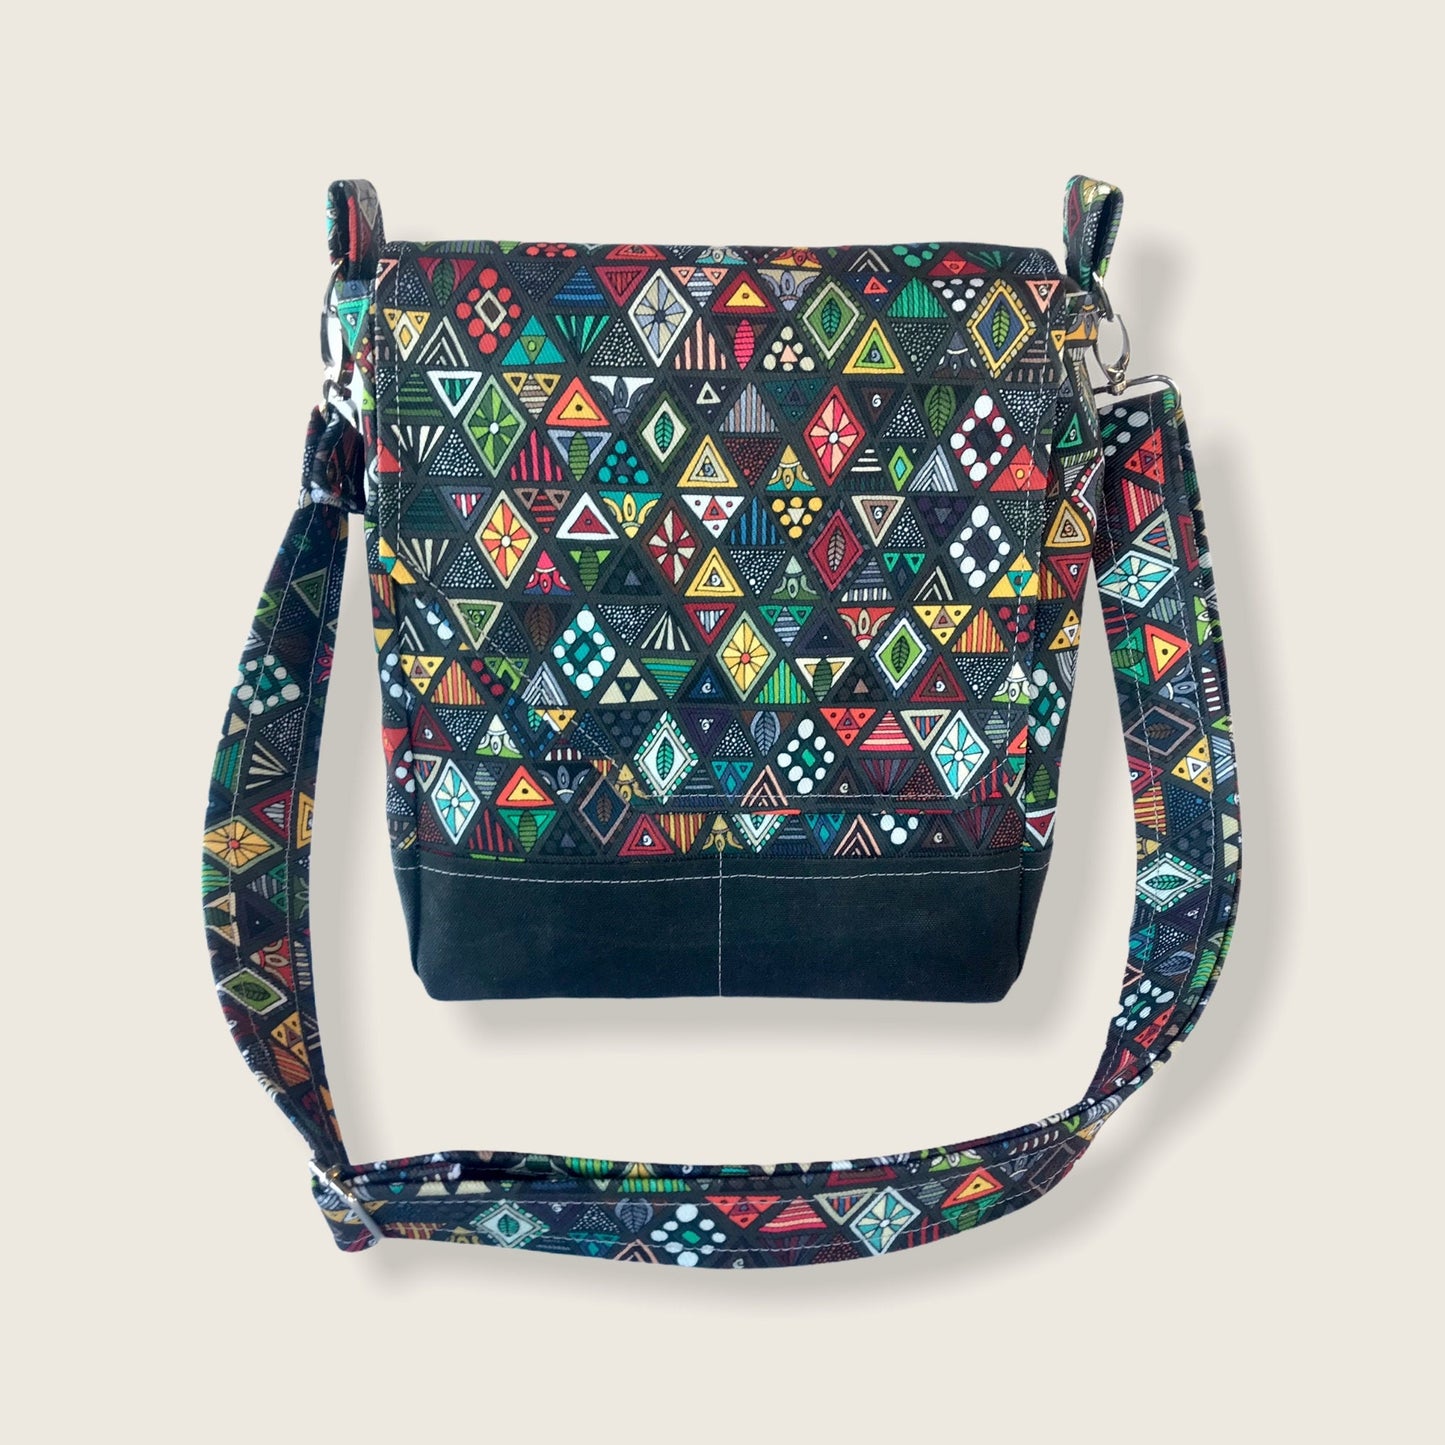 Geometric print purse, moorish style bag, mudcloth style bag, geometric art purse.